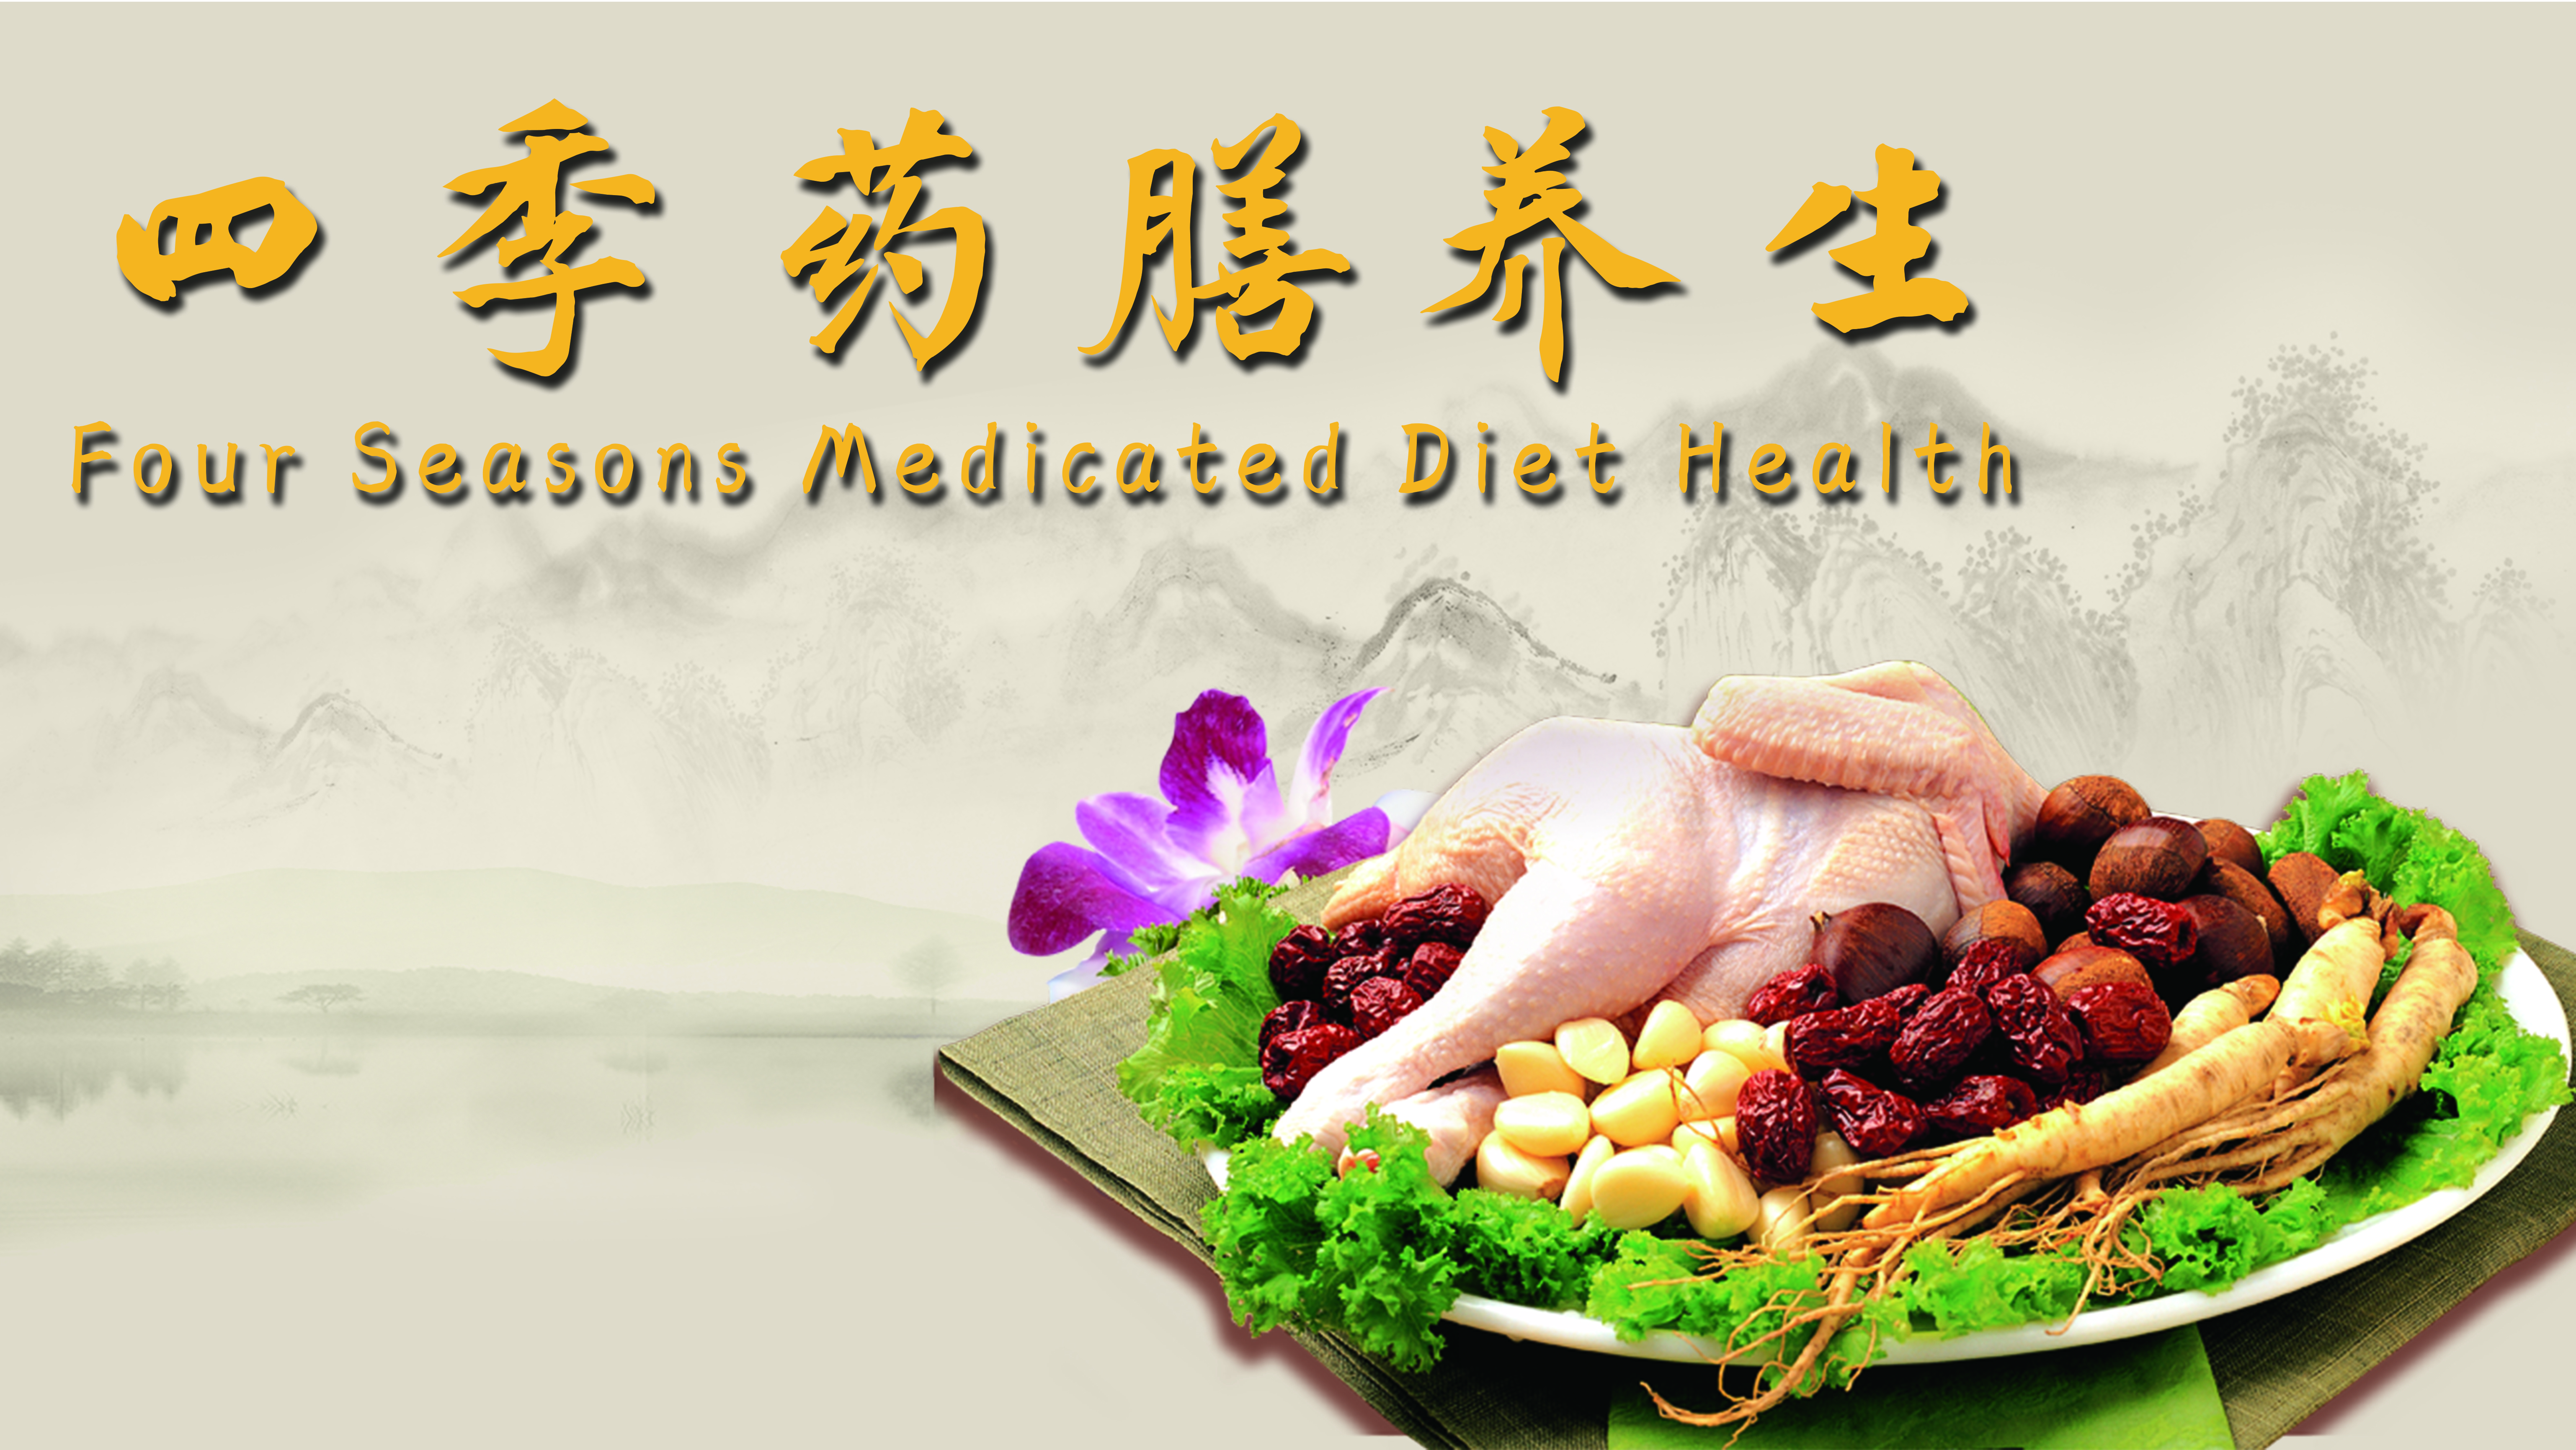 “Four Seasons Medicated Diet Health”